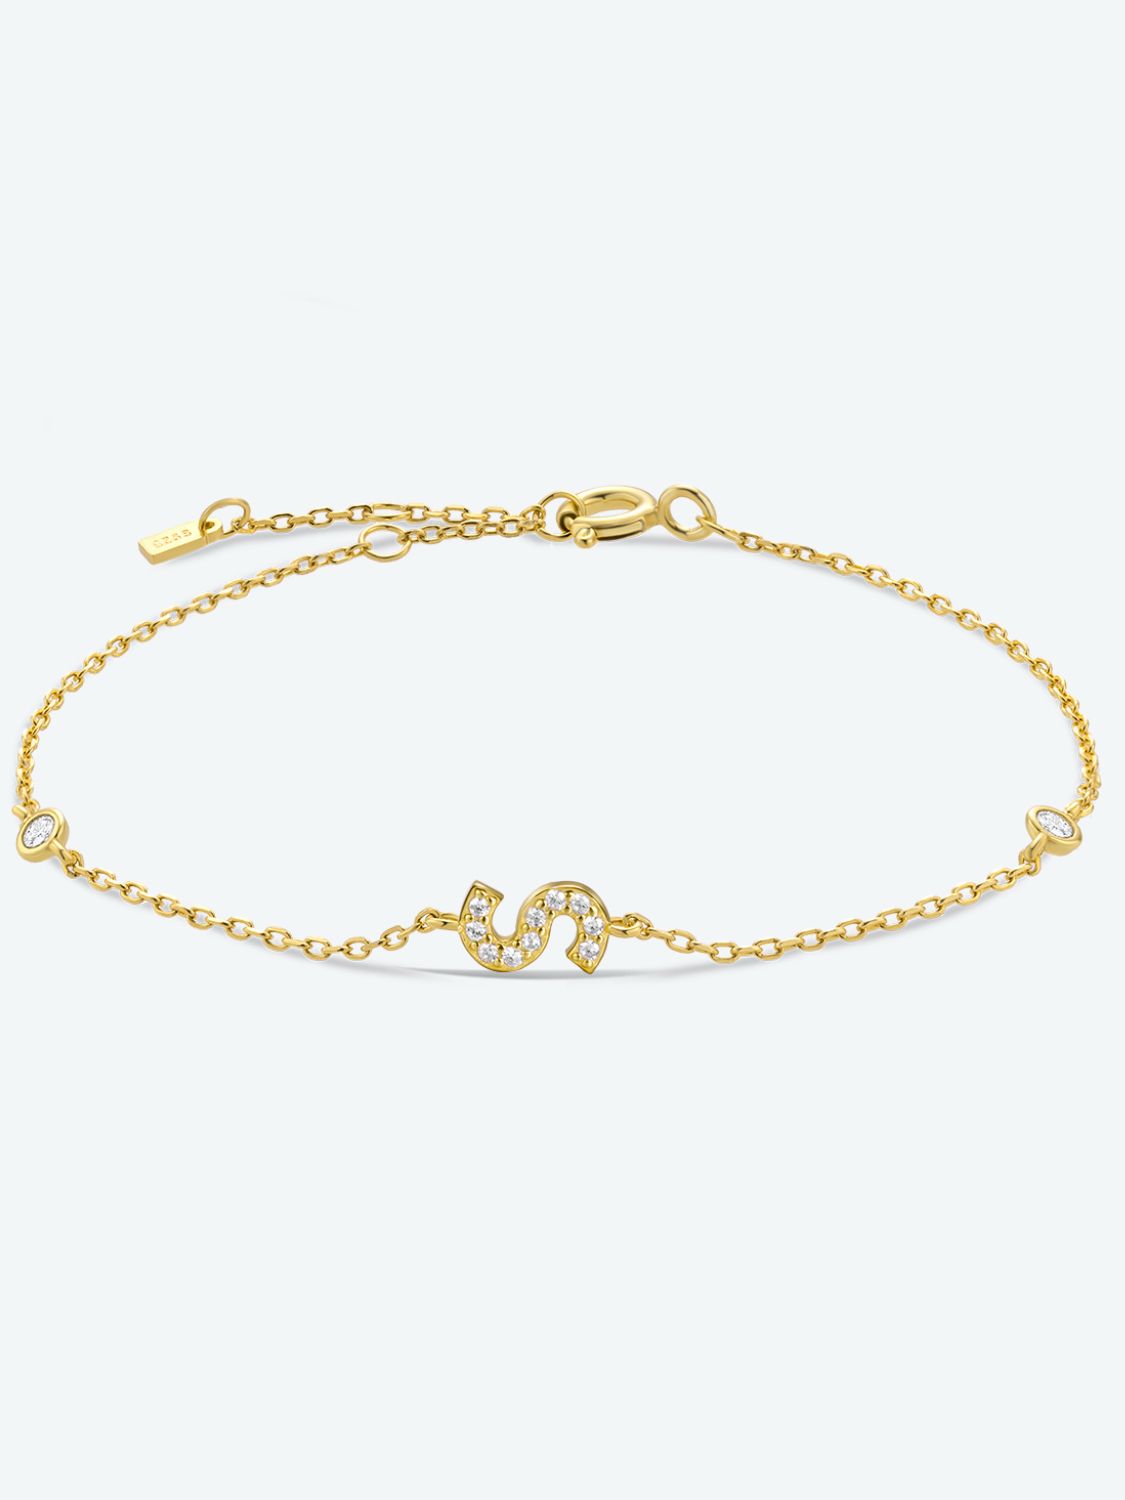 Q To U Zircon 925 Sterling Silver Bracelet - S/Gold / One Size - Women’s Jewelry - Bracelets - 13 - 2024